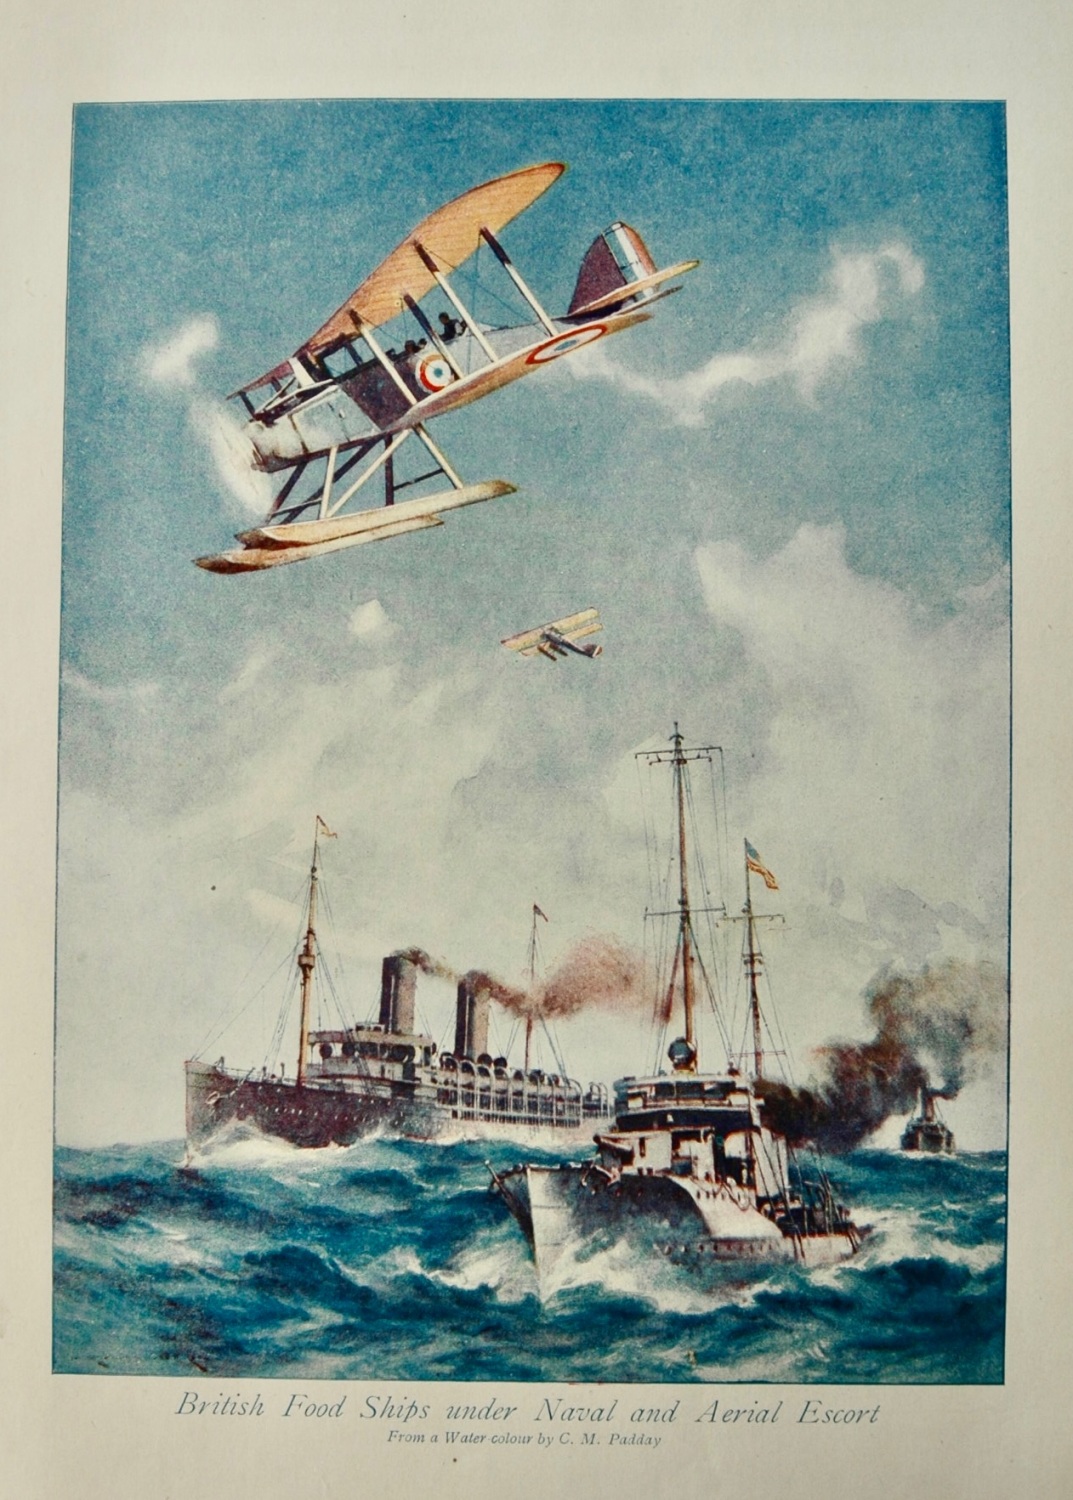 British Food Ships under Naval and Aerial Escort.  (1814 - 1918 War.)